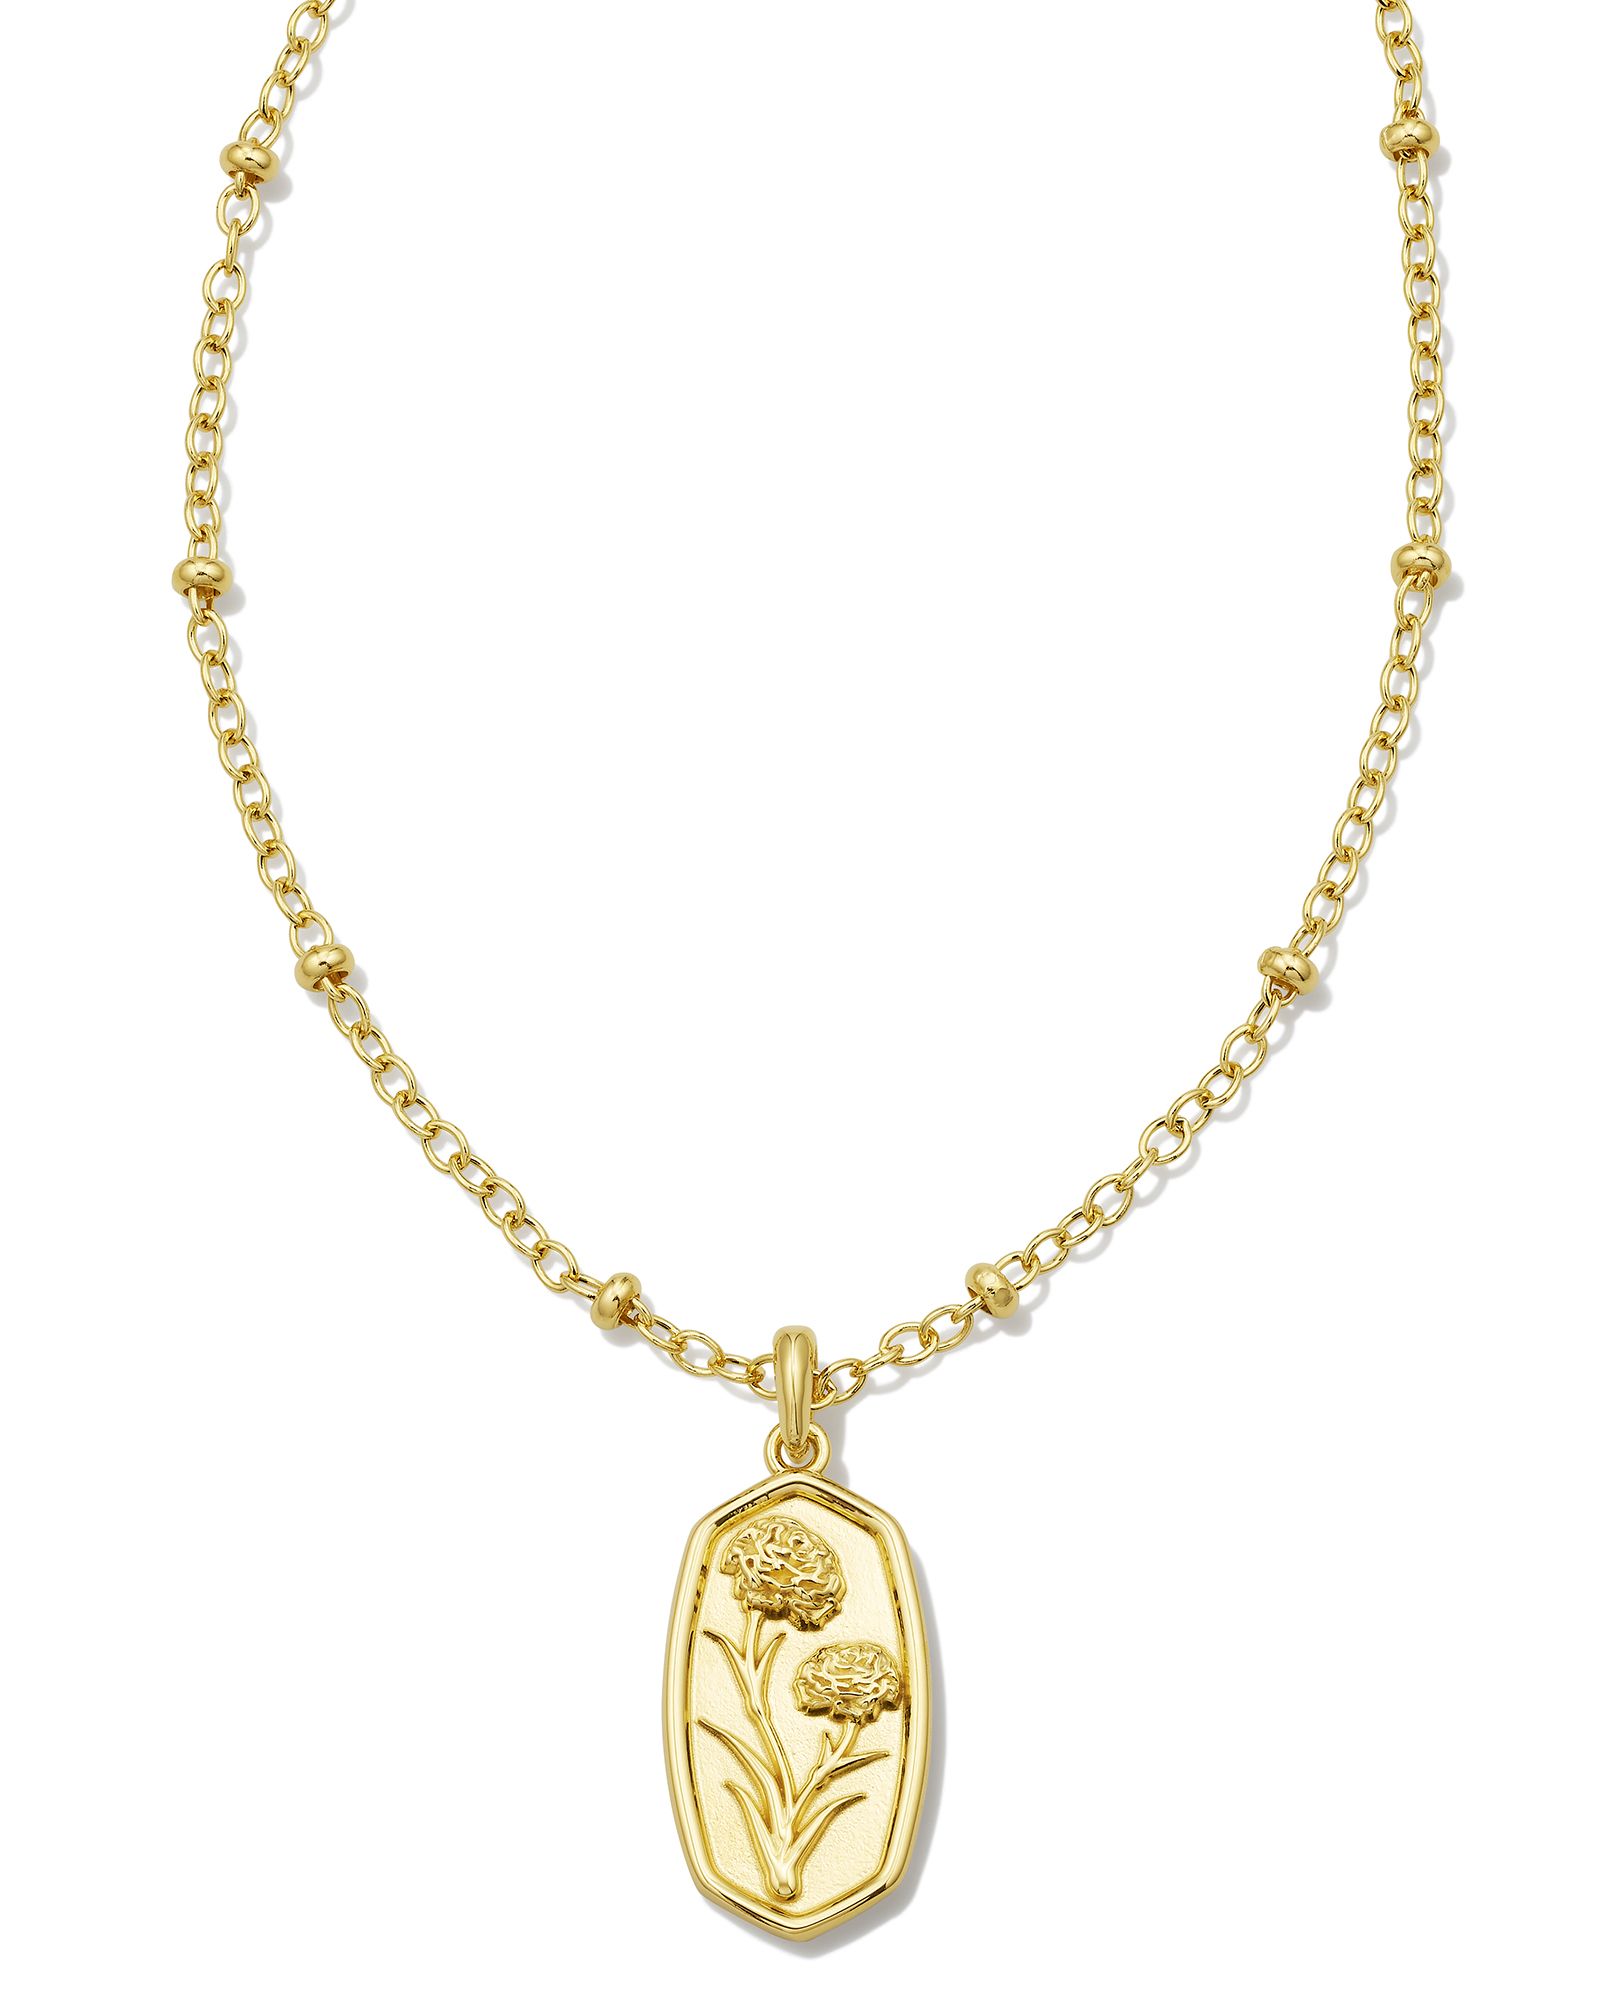 Bryleigh Charm Necklace in 18k Gold Vermeil | Kendra Scott | Kendra Scott